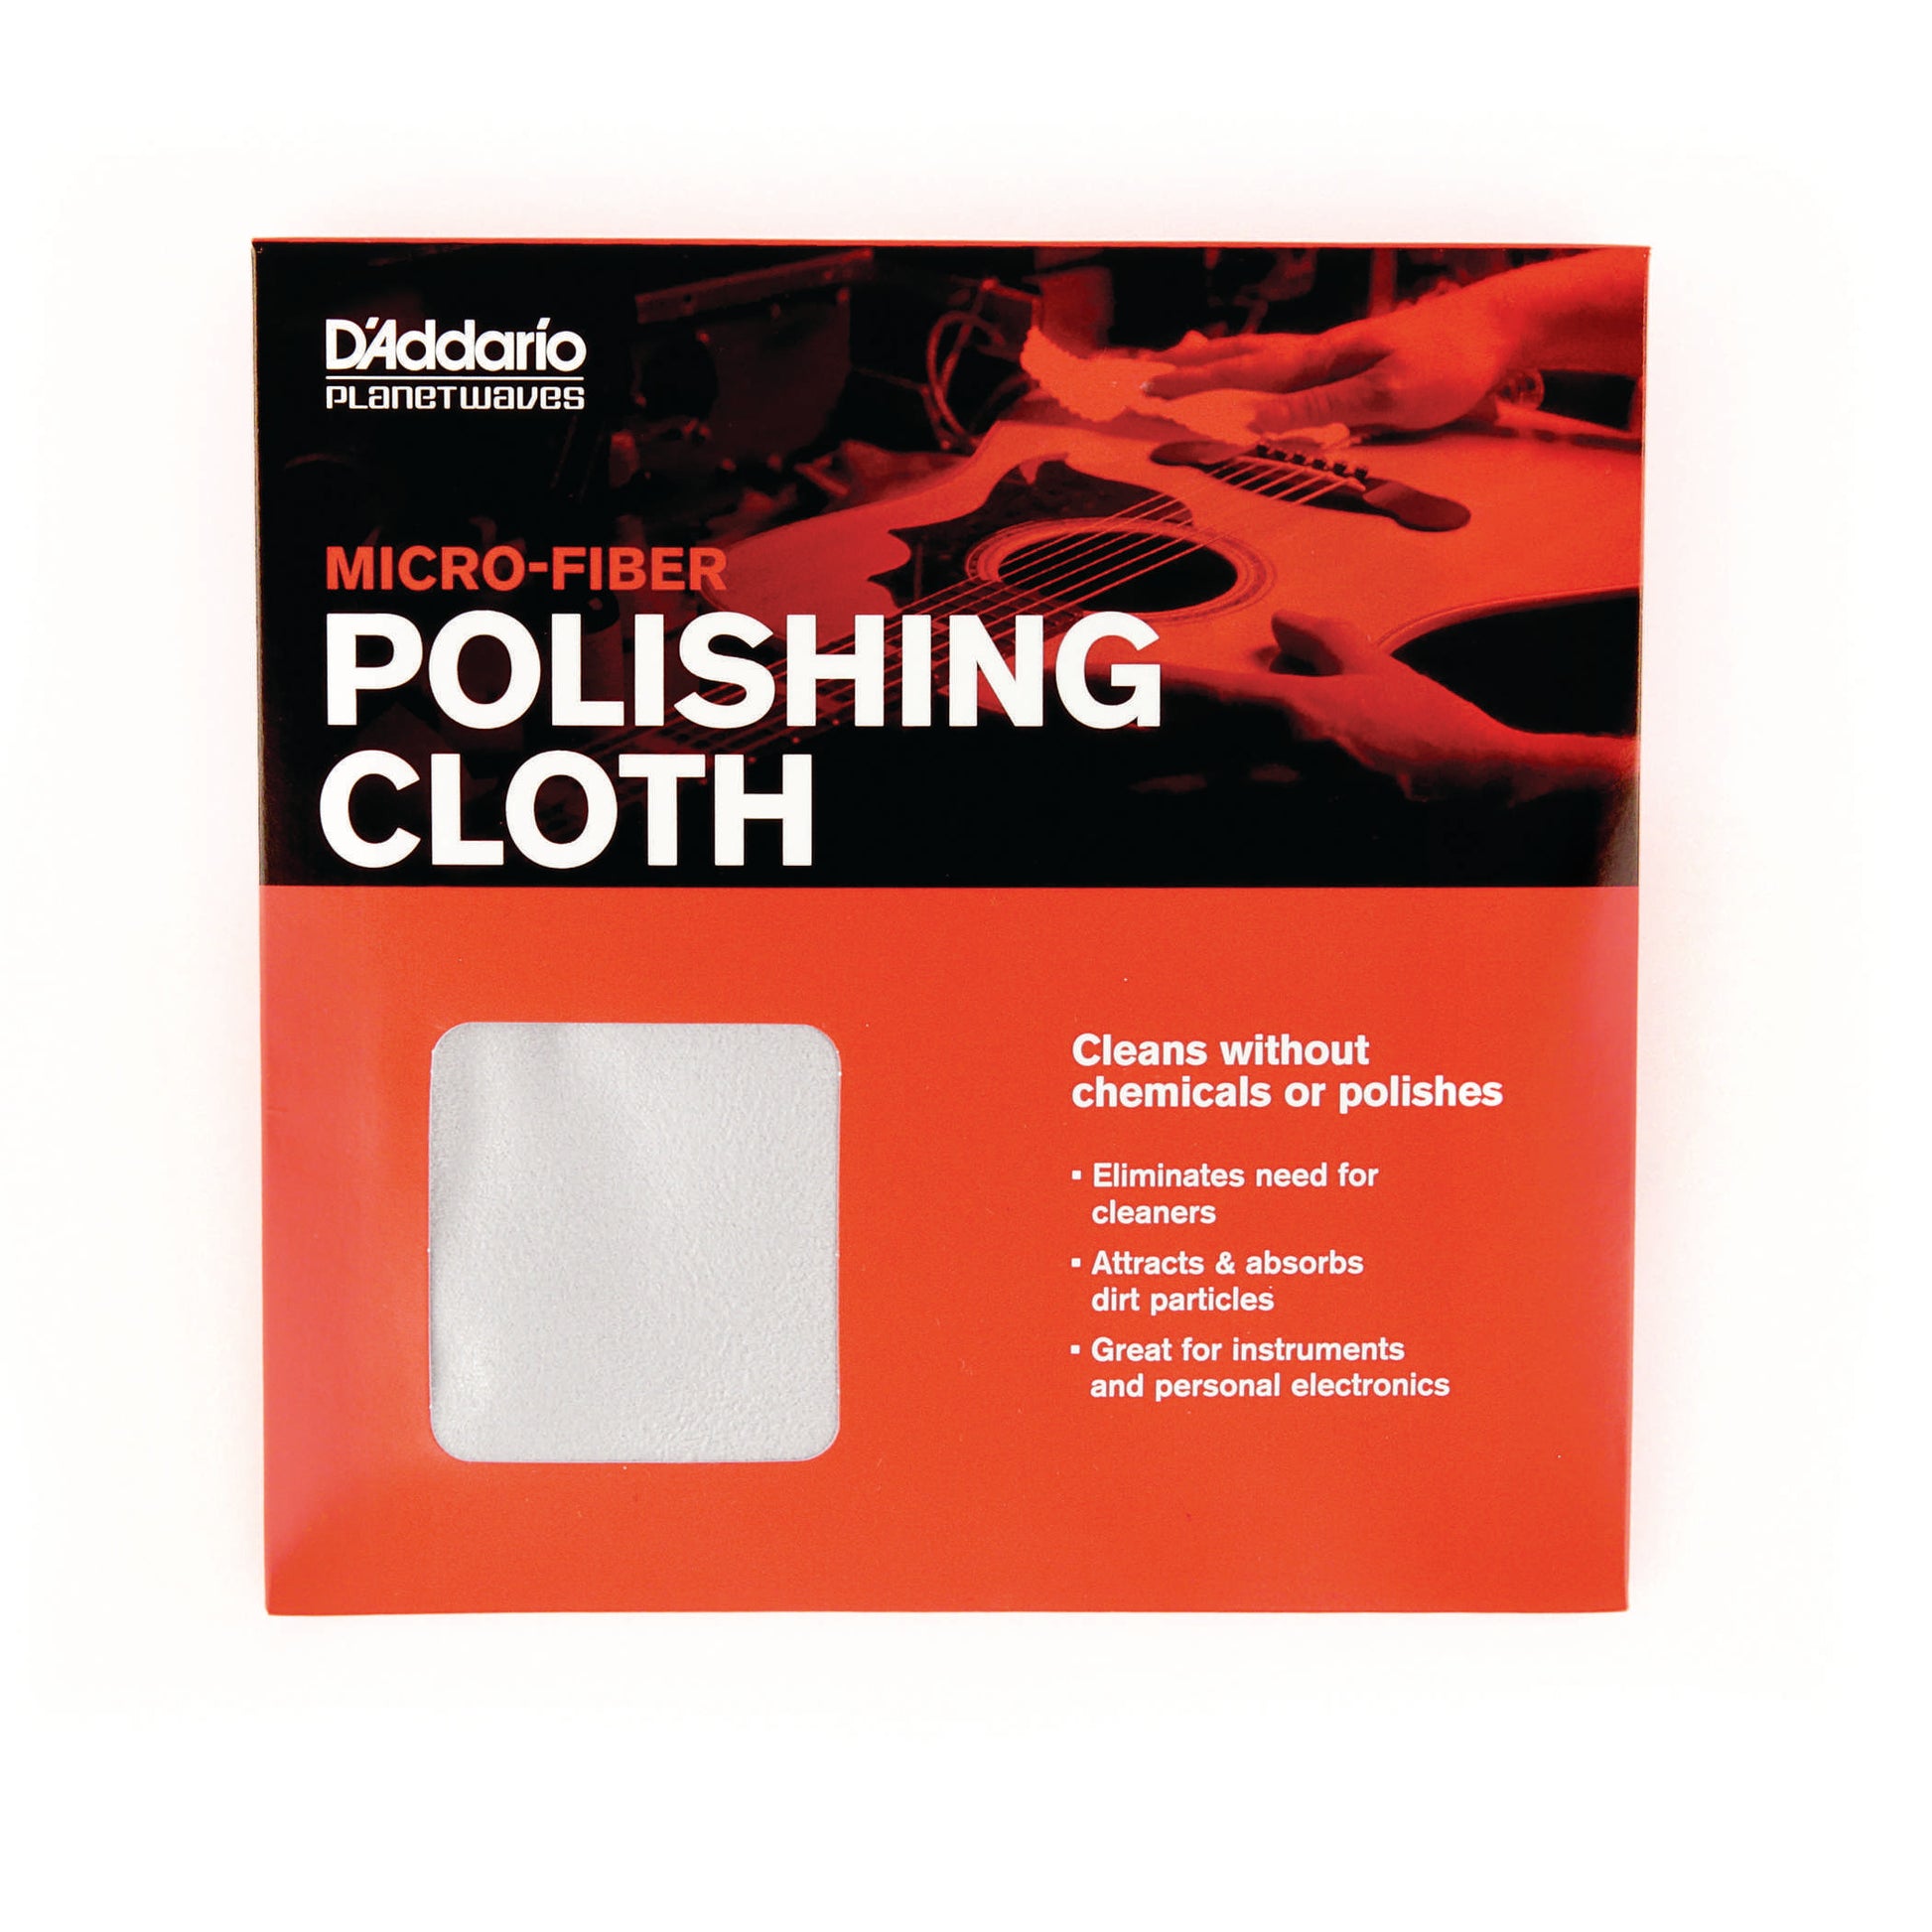 D'Addario Planet Waves Micro-Fiber Polishing Cloth in packaging